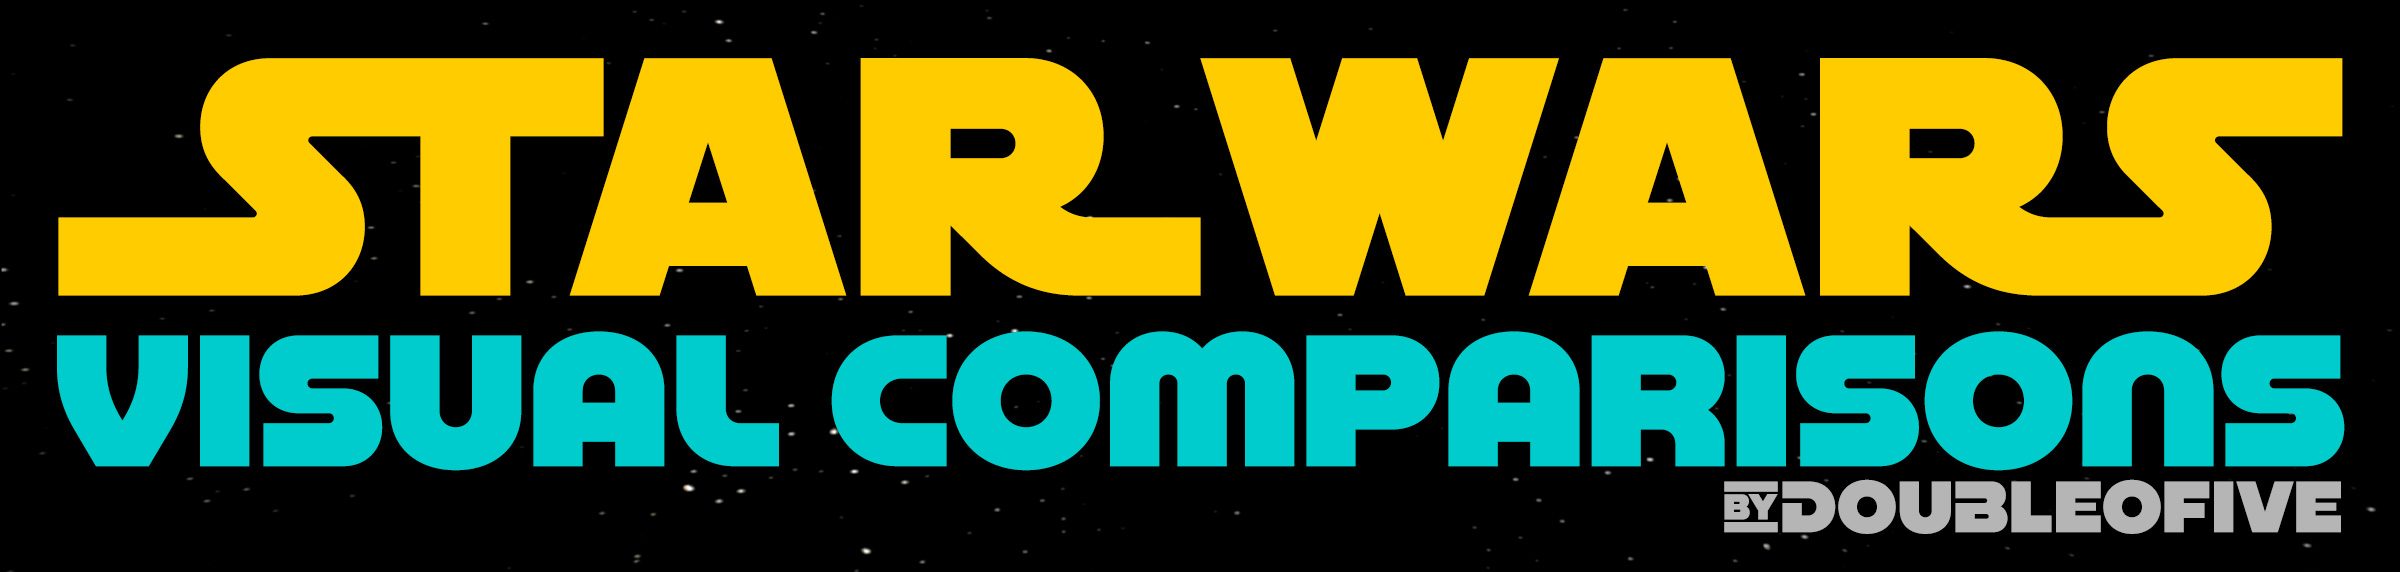 Star Wars Visual Comparisons